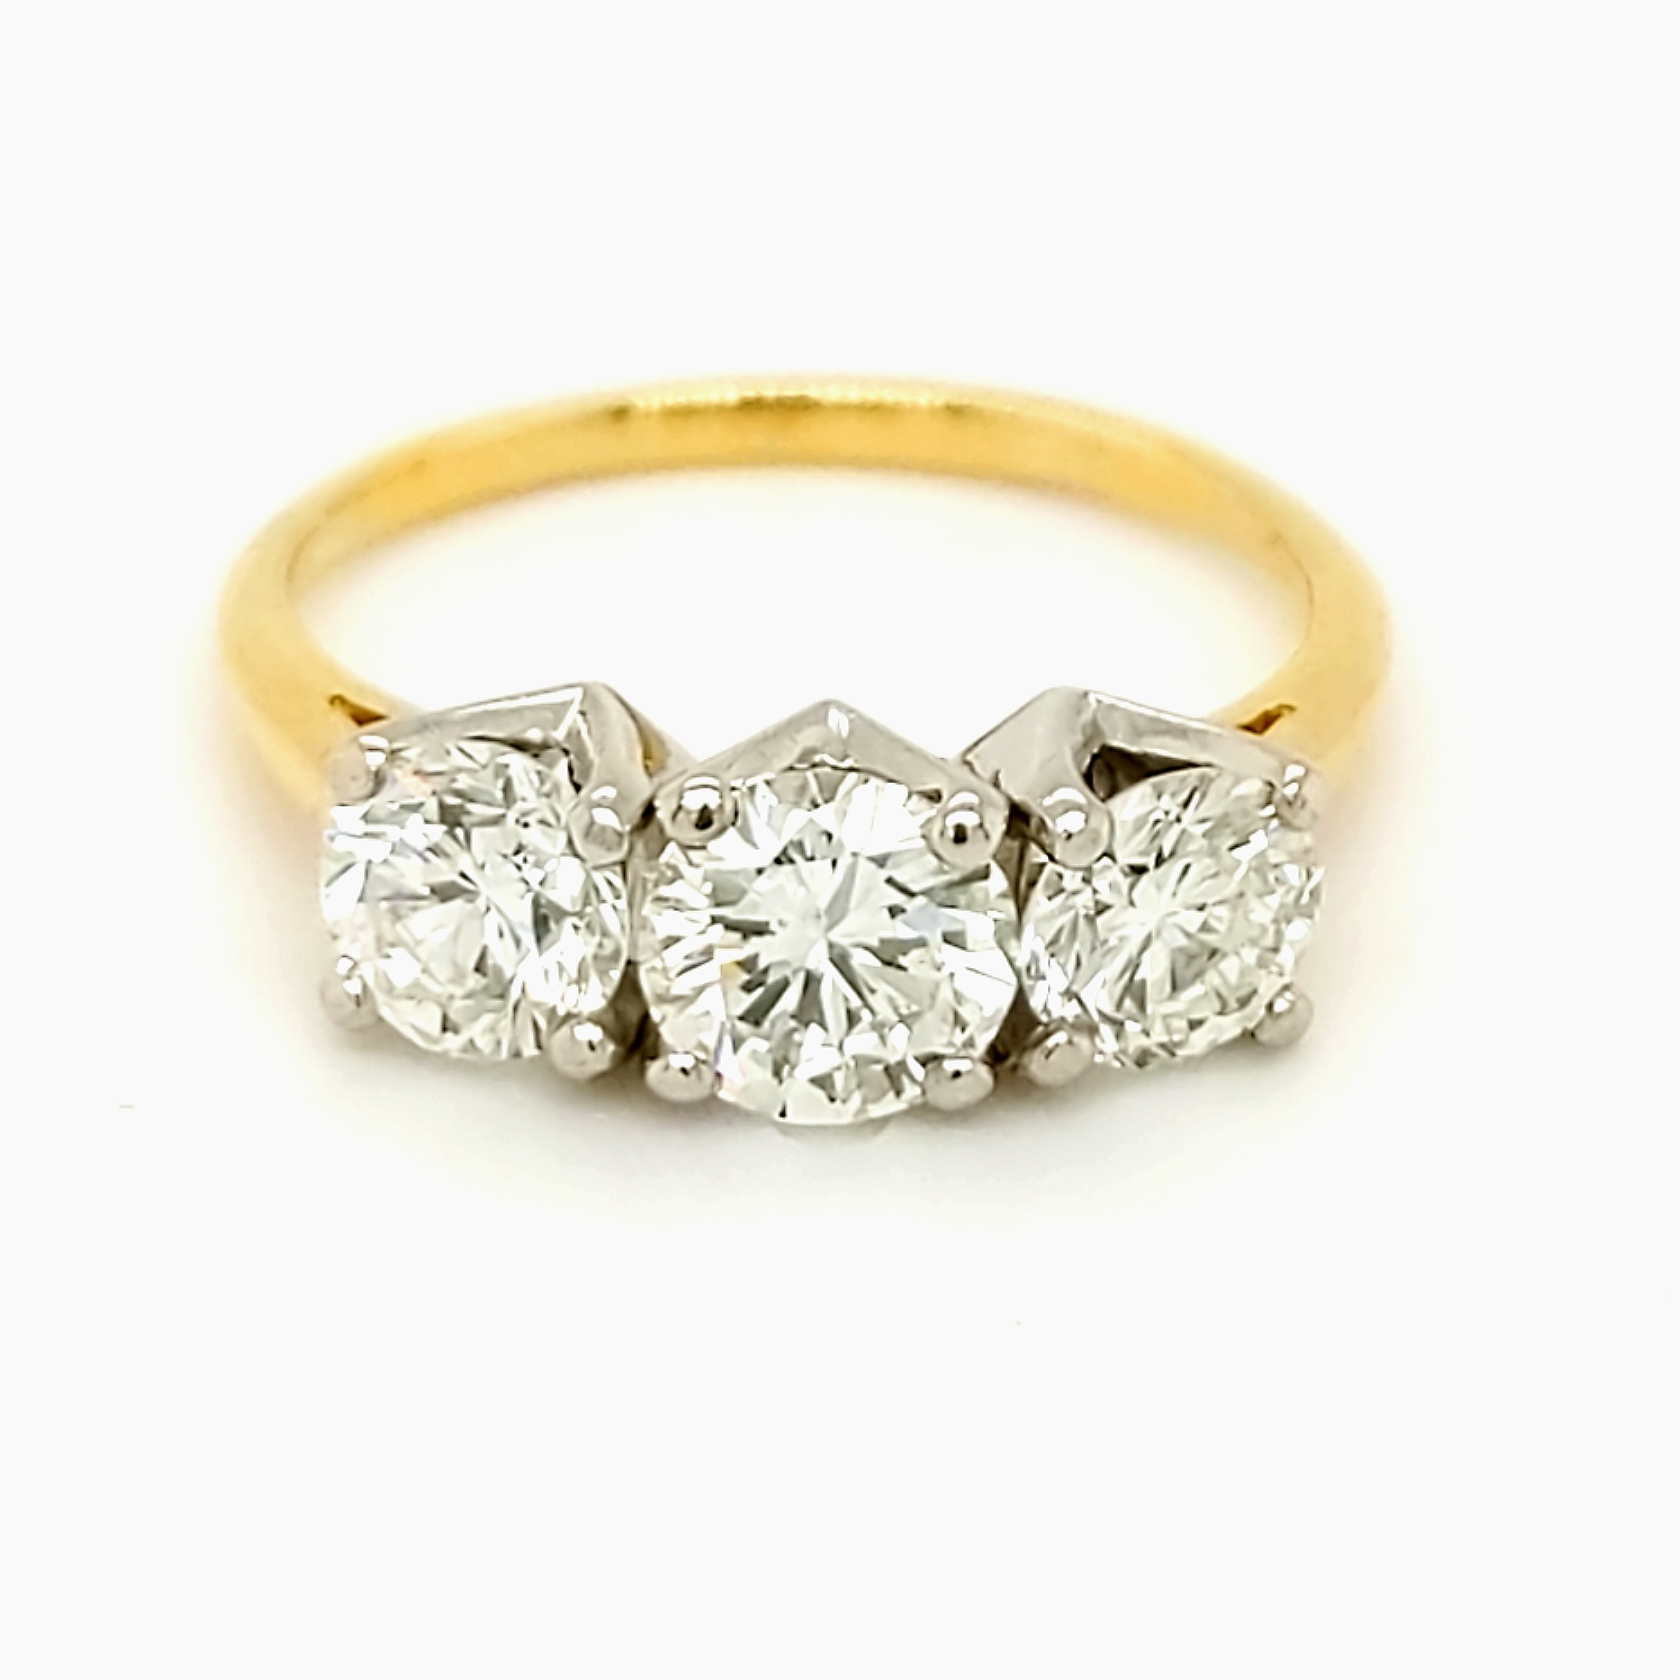 18K/Platinum 2.11ctw 3 stone RBC diamond ring .87ct G-Vs1 in center & 2 matching G-Vvs2 side diamonds 1.24ctw - finger size 7.50 QA+E $12,980.00